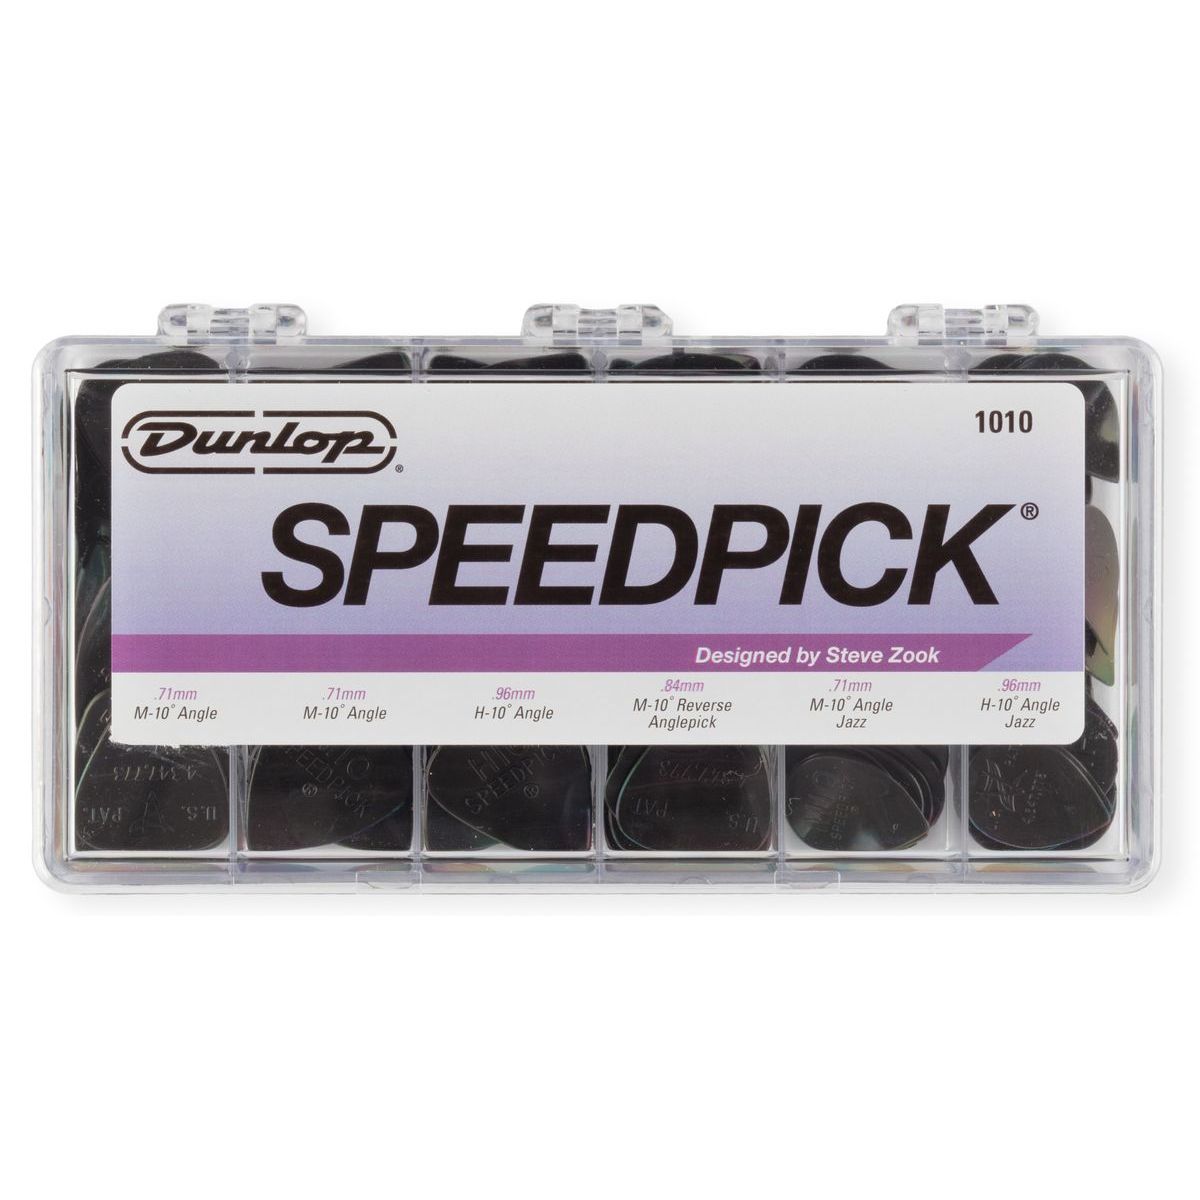 Медиаторы Dunlop 1010 Speedpick Display (144 шт) медиаторы dunlop 3090 216 шт